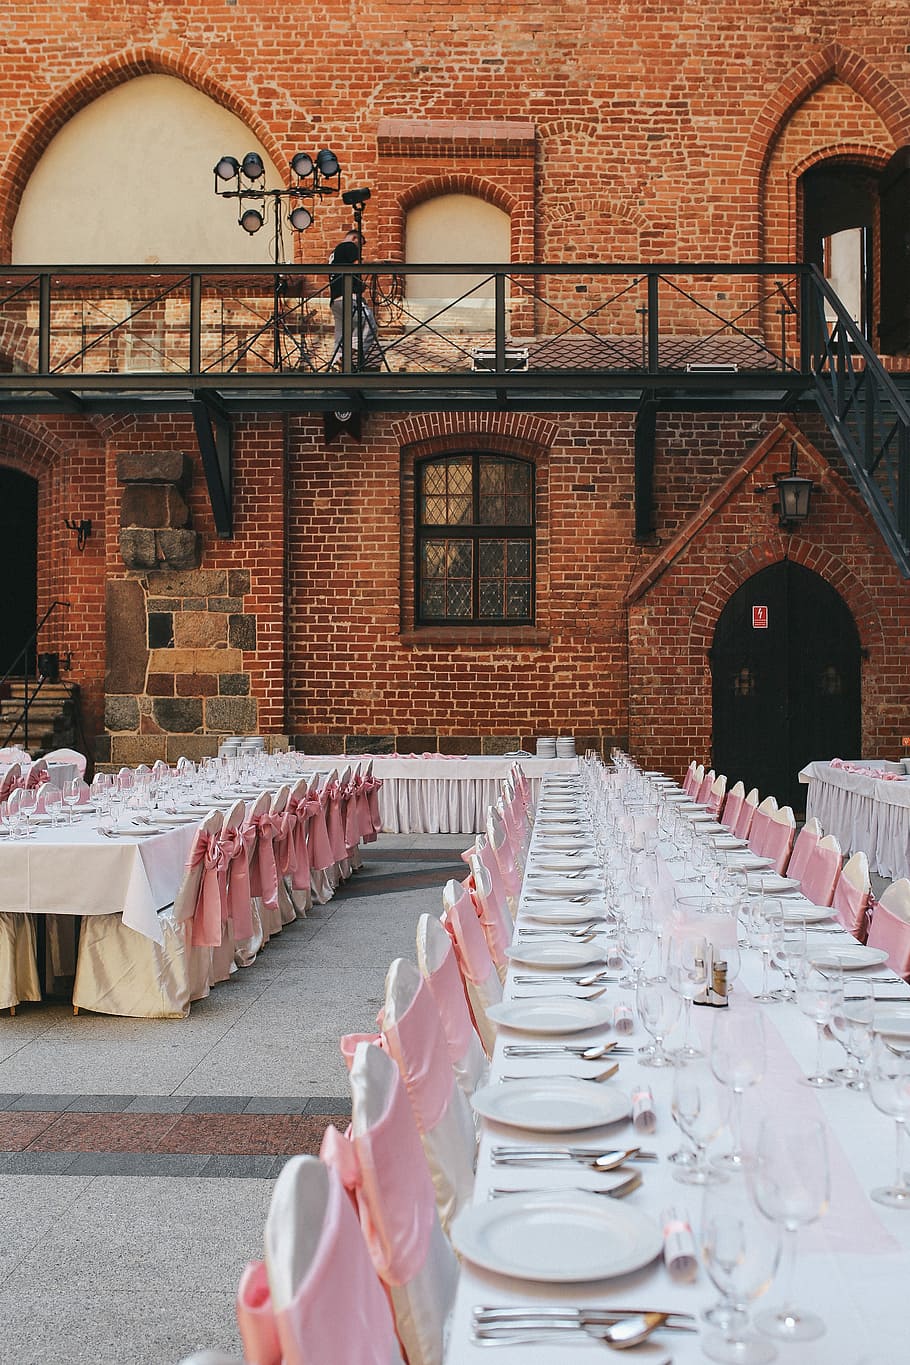 recepción de boda, castillo, mesa, vajilla, boda, juego de mesa, rosa, elegante, restaurante, silla